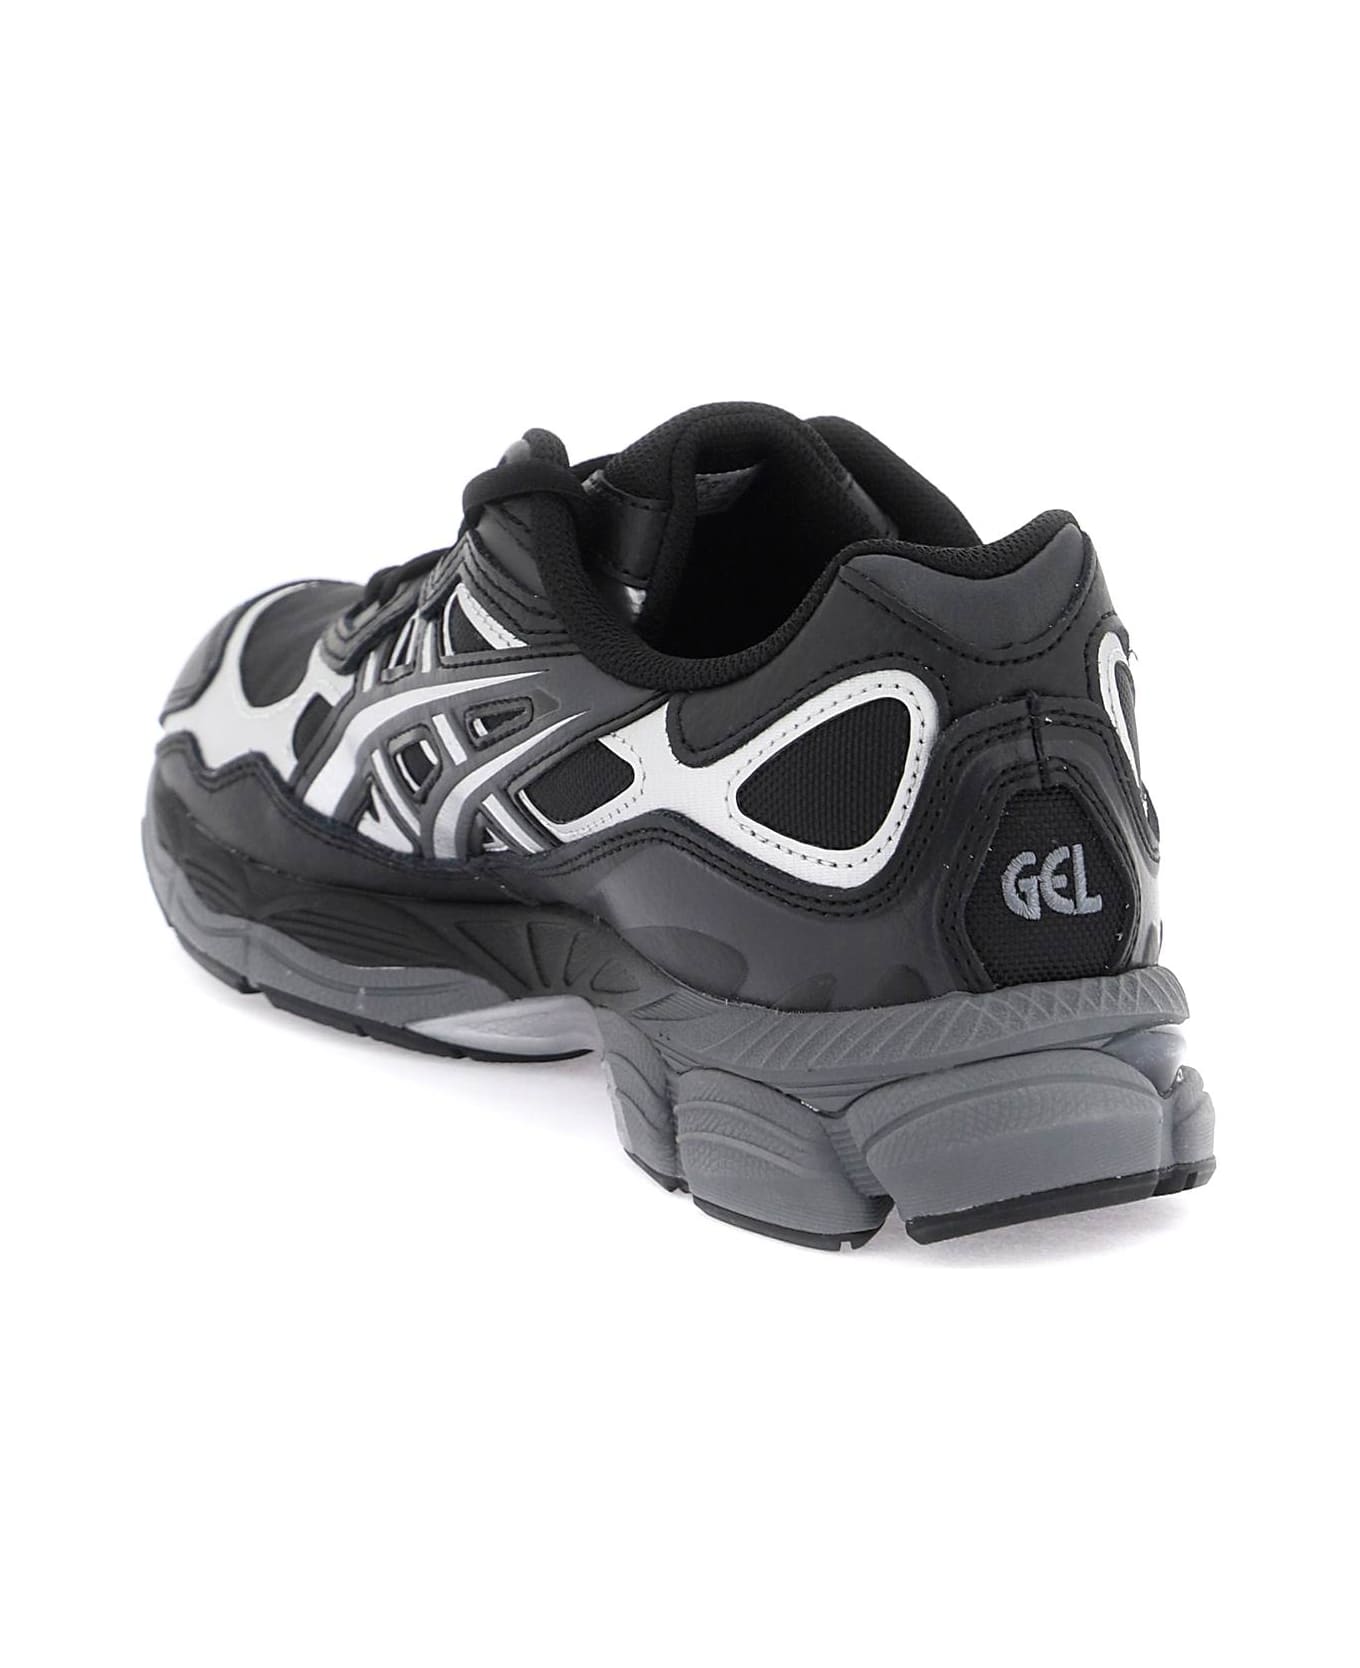 Asics Gel-kayano 14 Sneakers - BLACK GRAPHITE GREY (Black) スニーカー